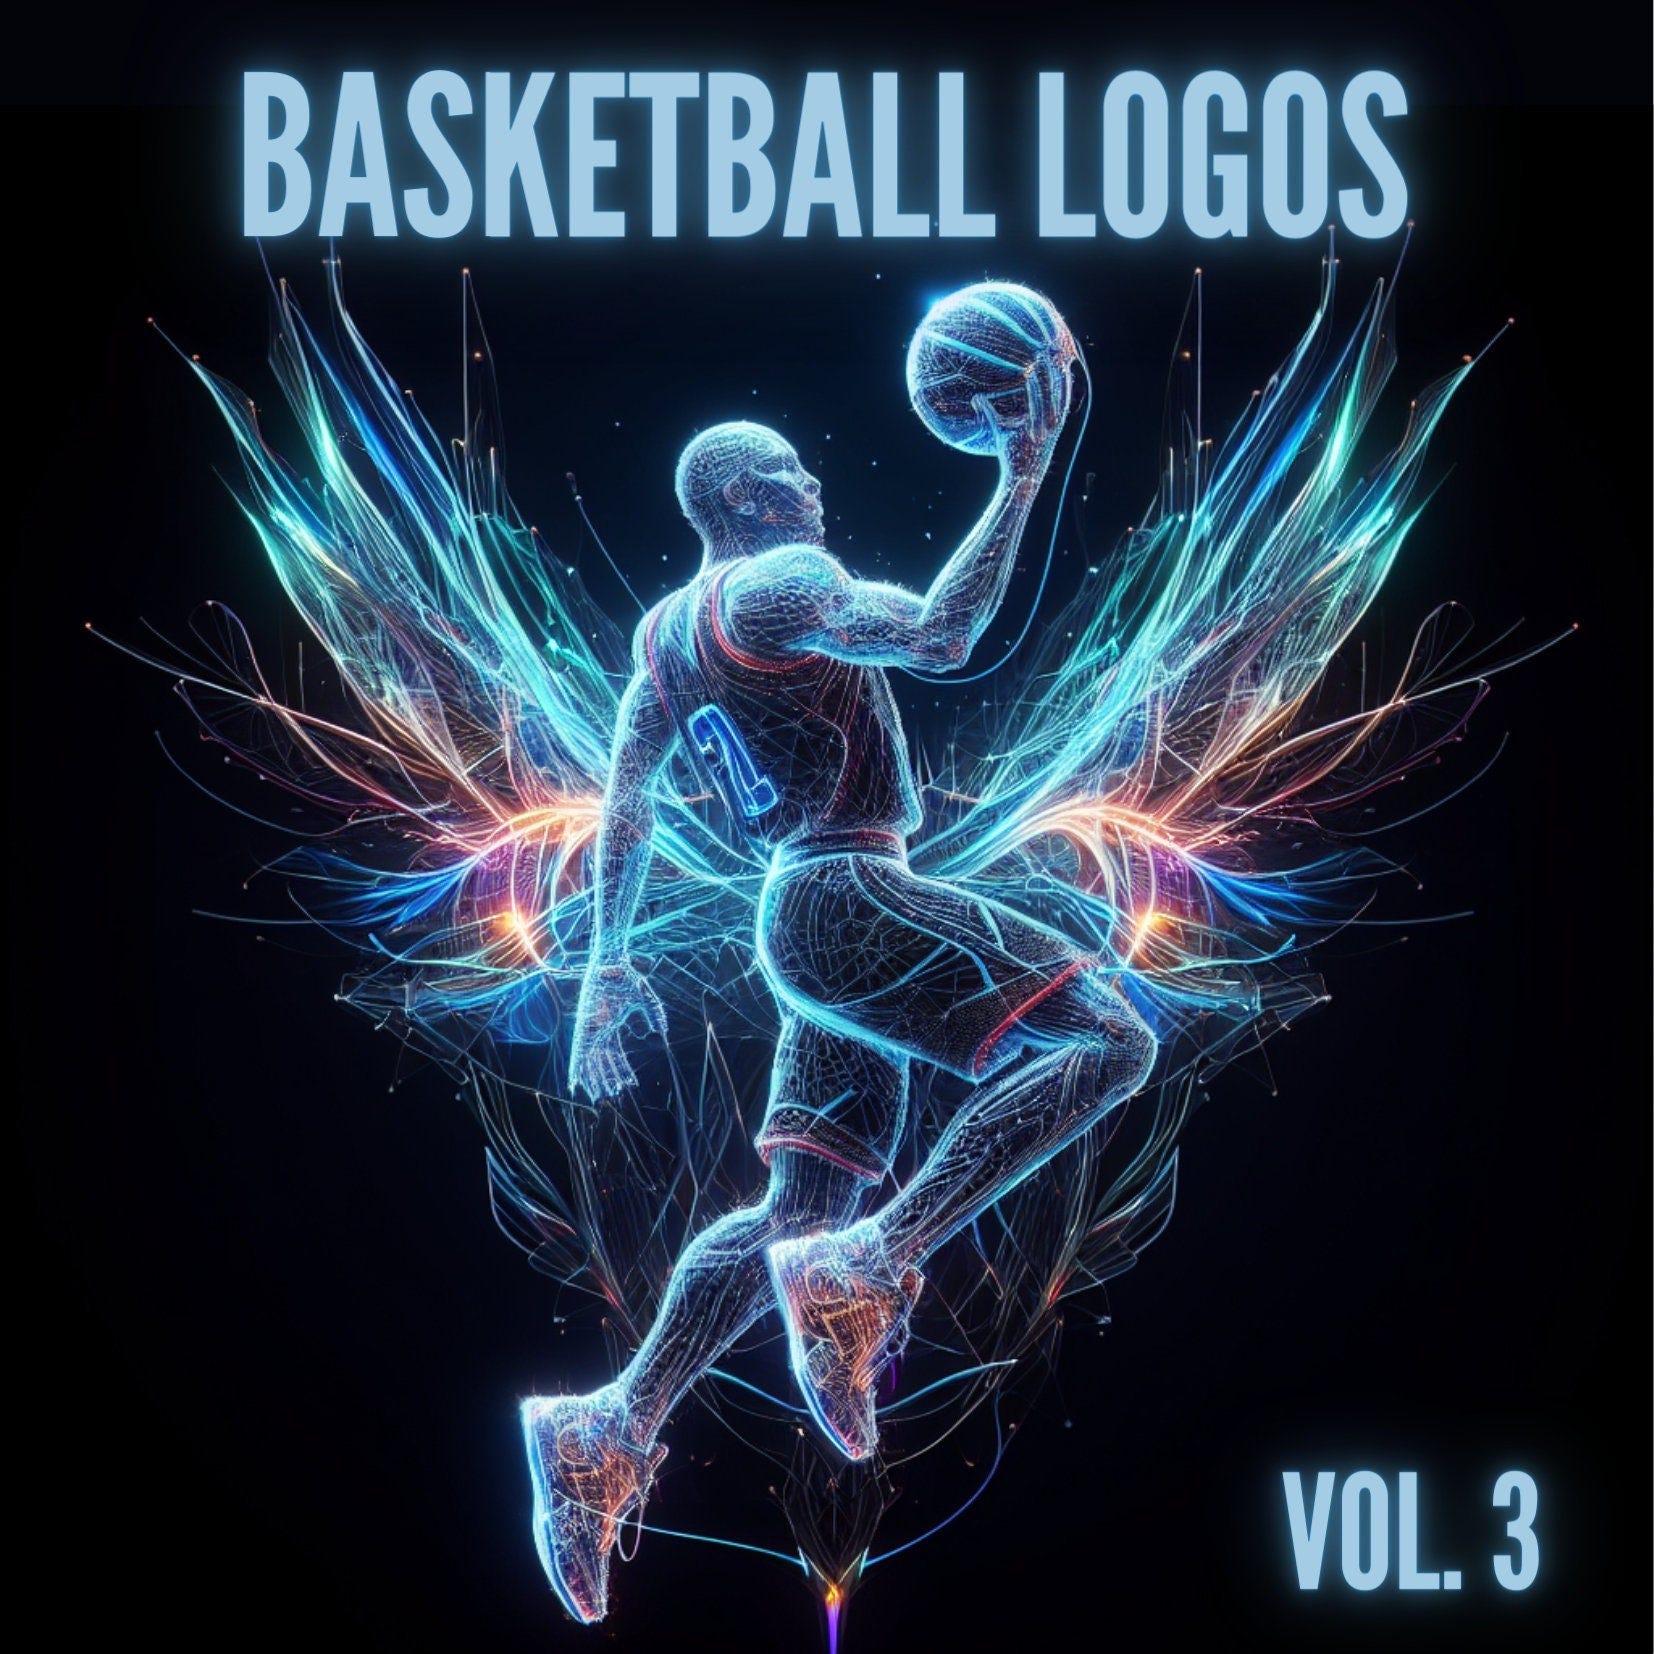 140+ Basketball Logo Designs Vol. 3 | Bundle | Free Commercial Use | Basketball JPG | Instant Download